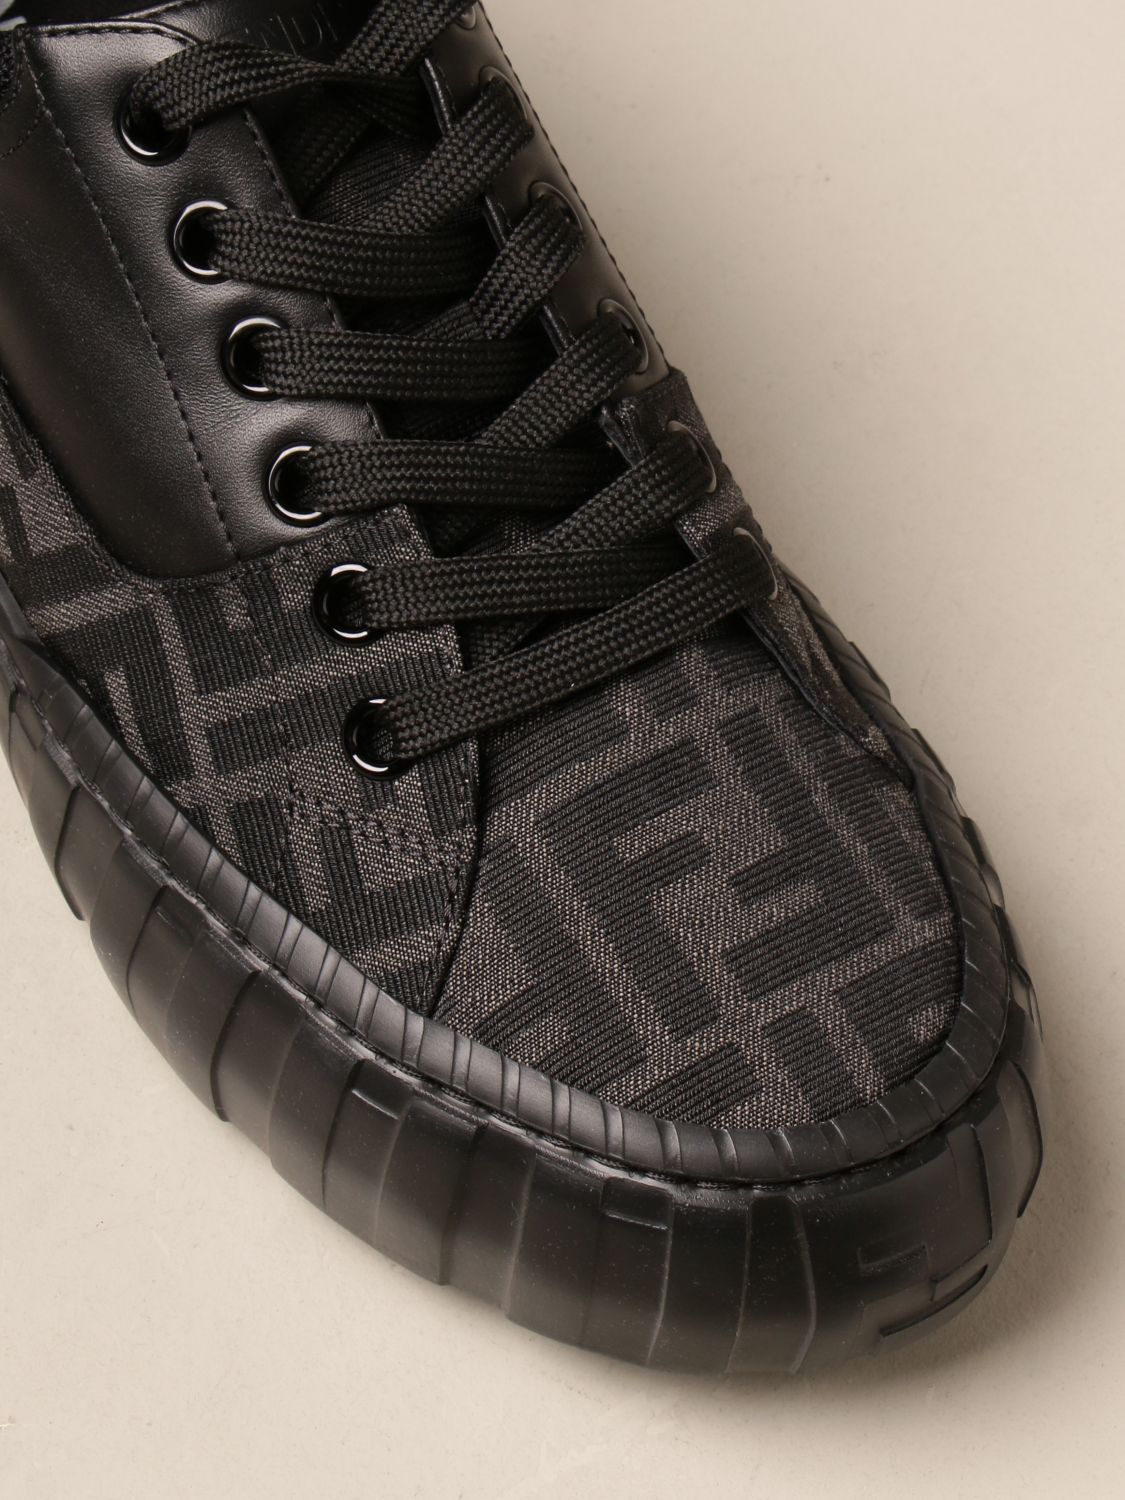 FENDI: sneakers in leather and FF fabric - Grey | Fendi sneakers 7E1415 ...